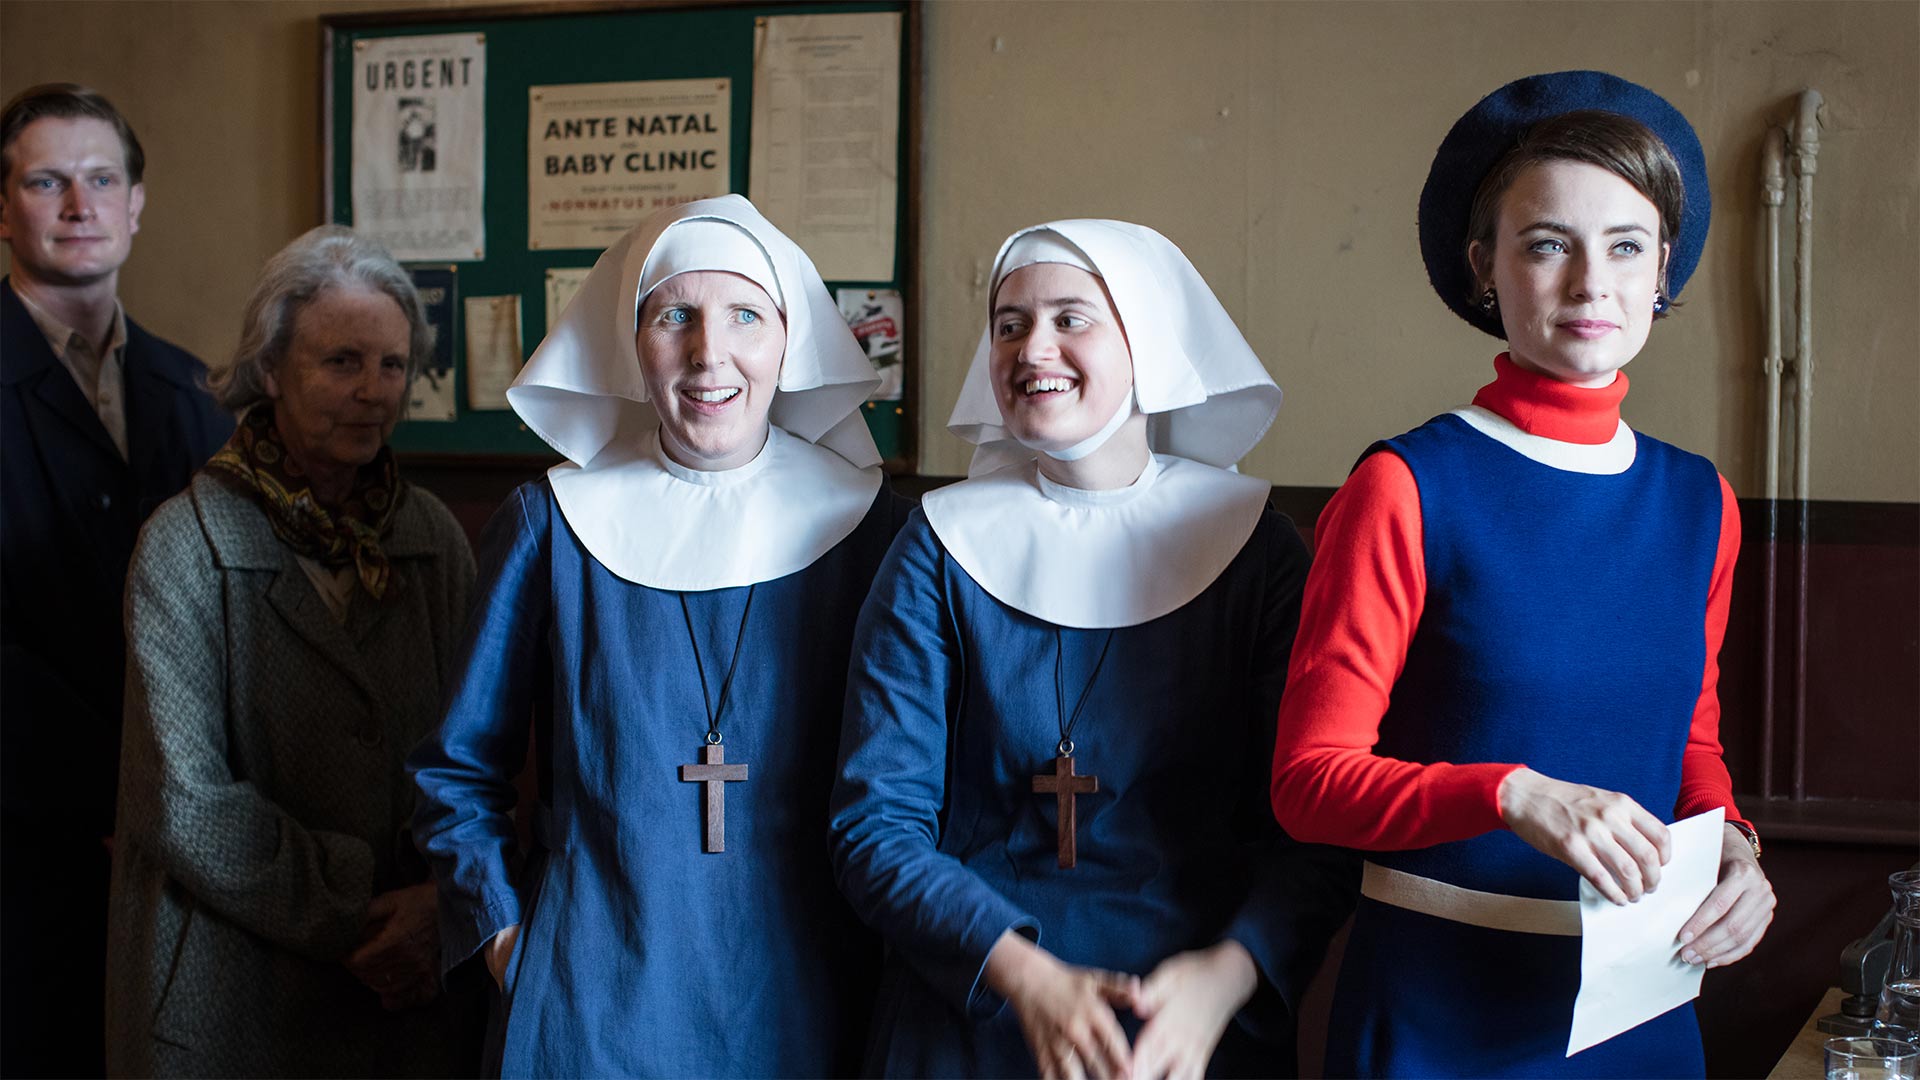 Sister Hilda (FENELLA WOOLGAR), Sister Frances (ELLA BRUCCOLERI), Valerie Dyer (JENNIFER KIRBY)